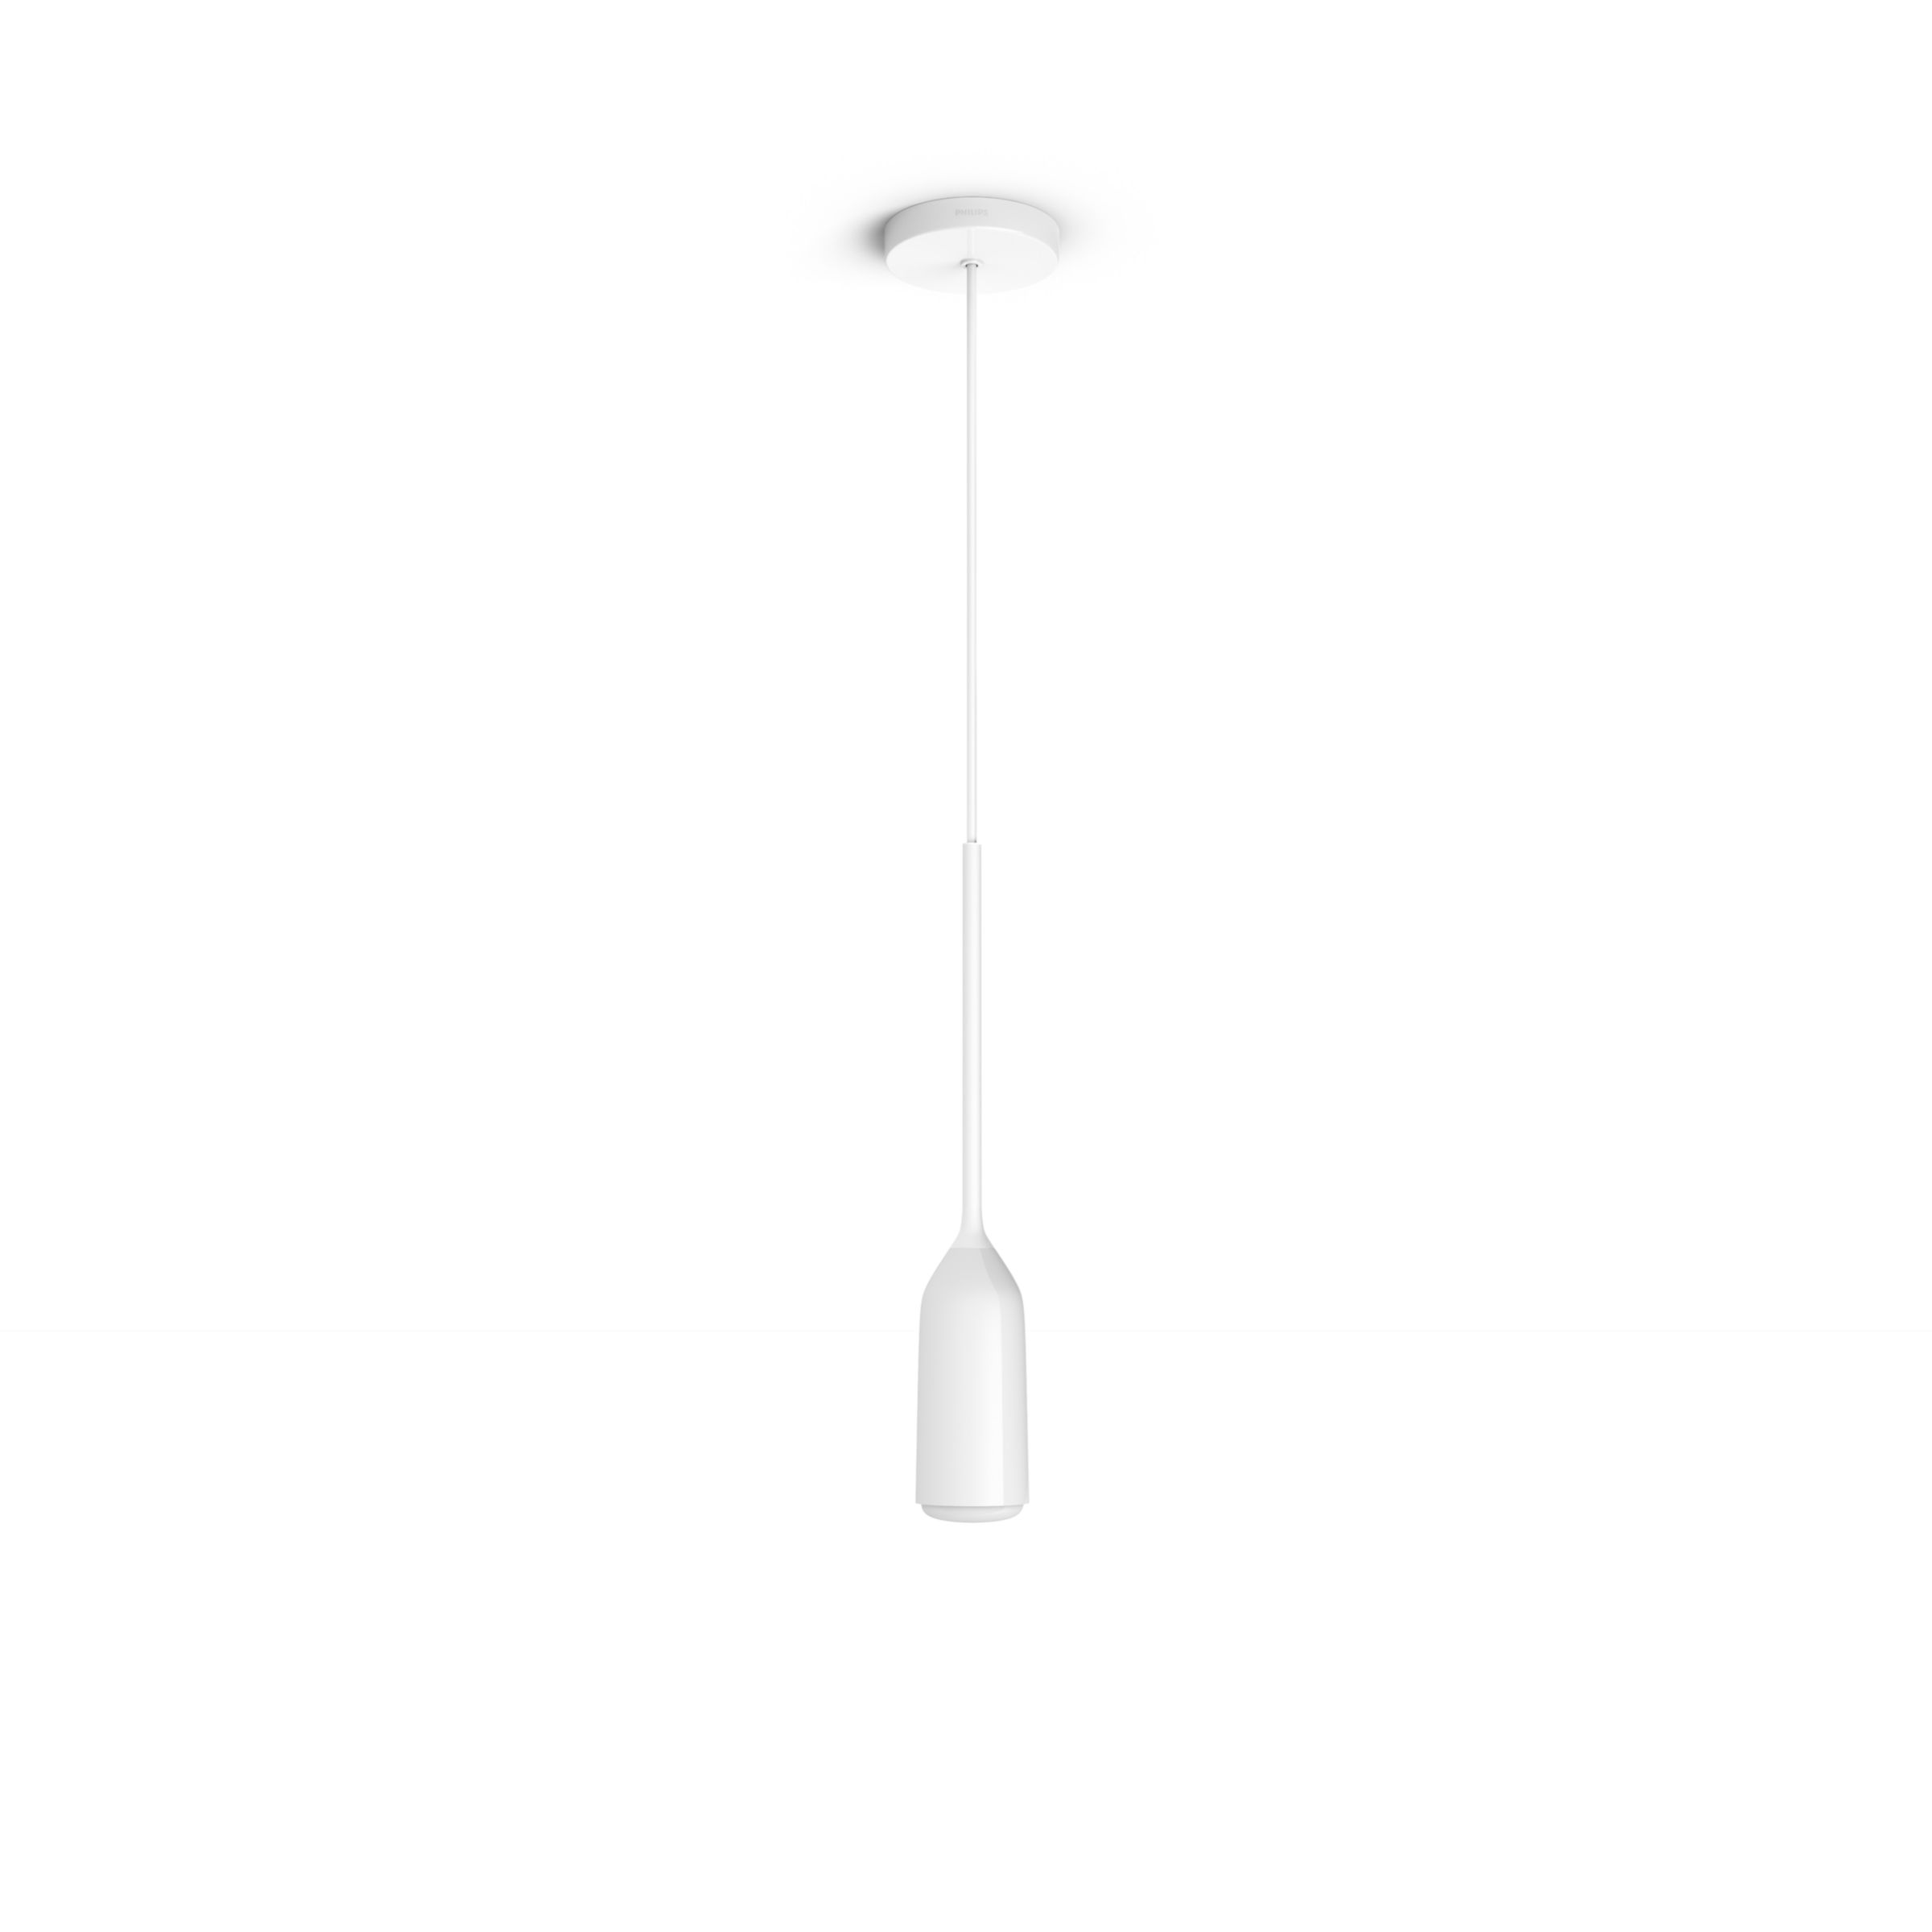 Hue Devote LED Pendelleuchte – Weiß | Philips Hue DE